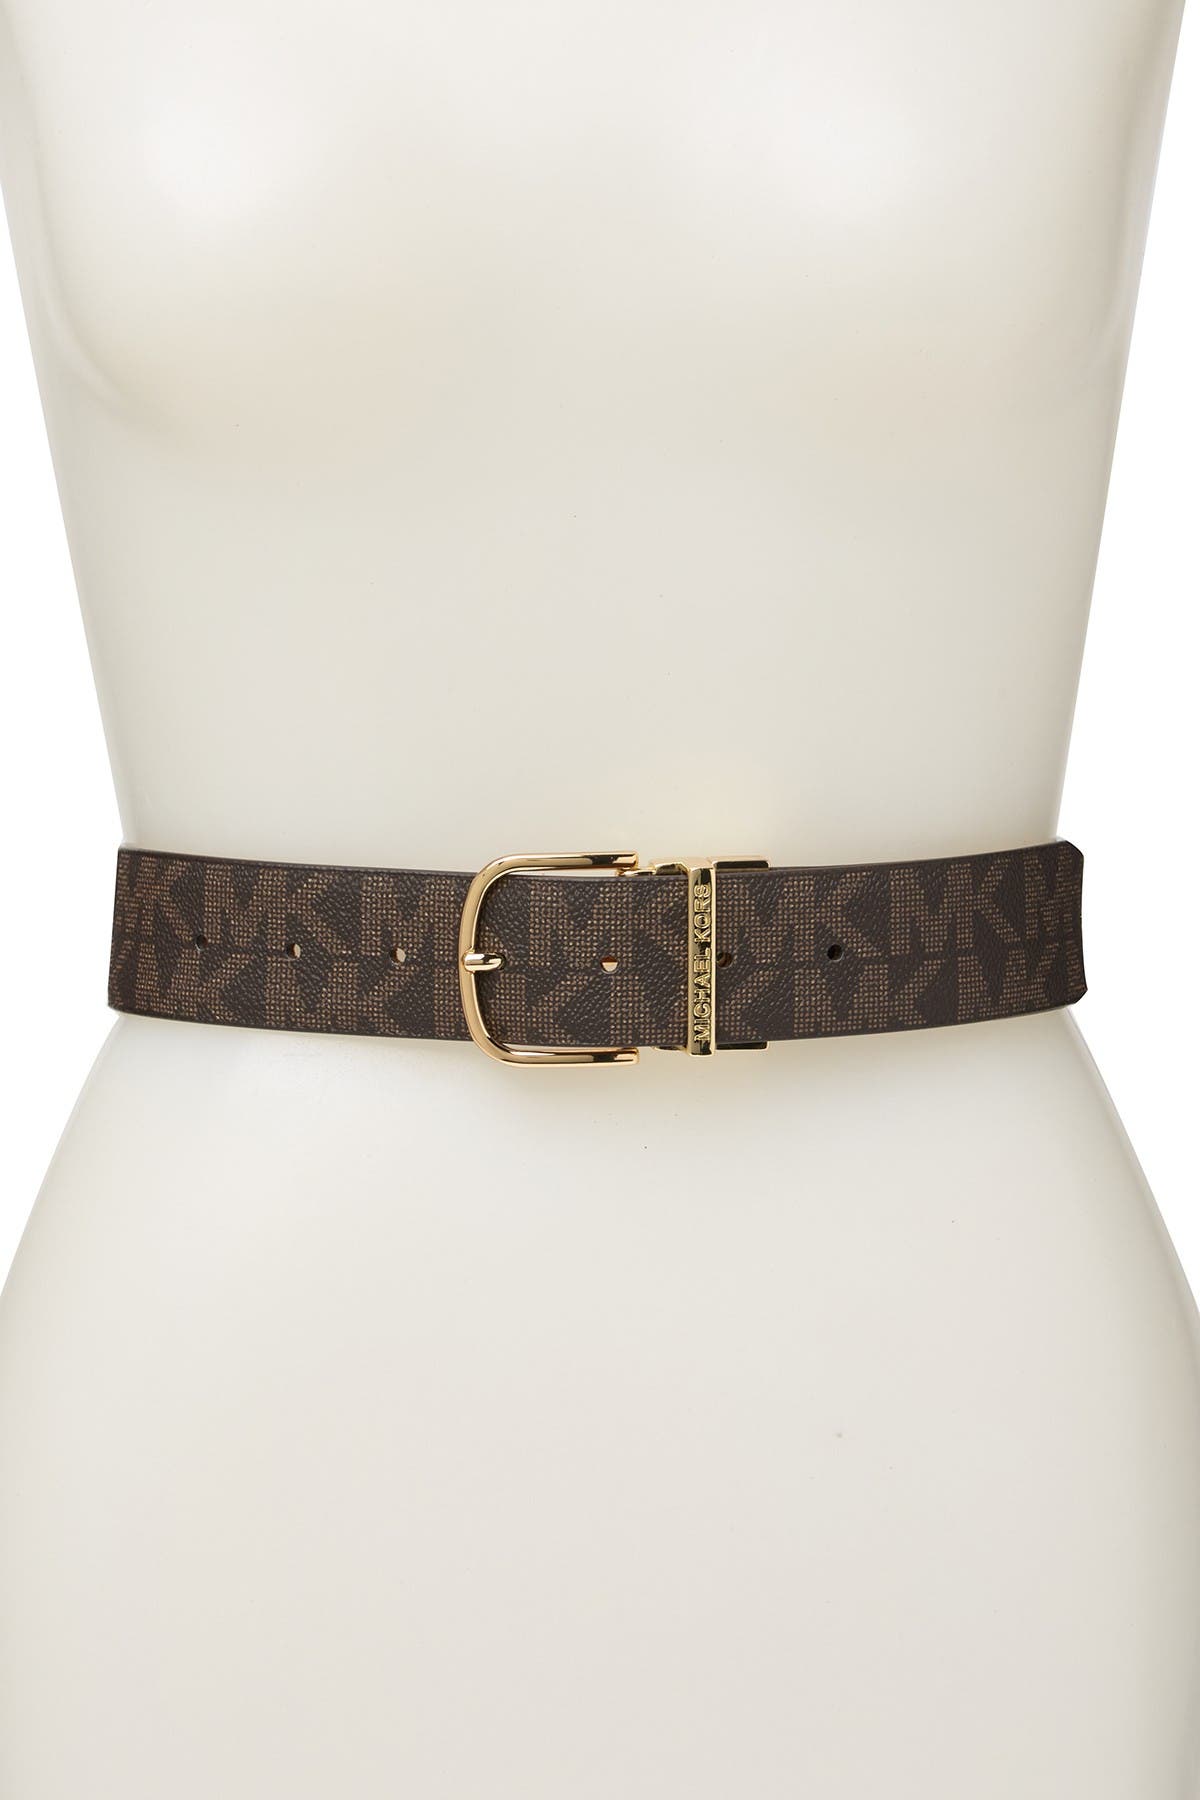 michael kors women's reversible belt